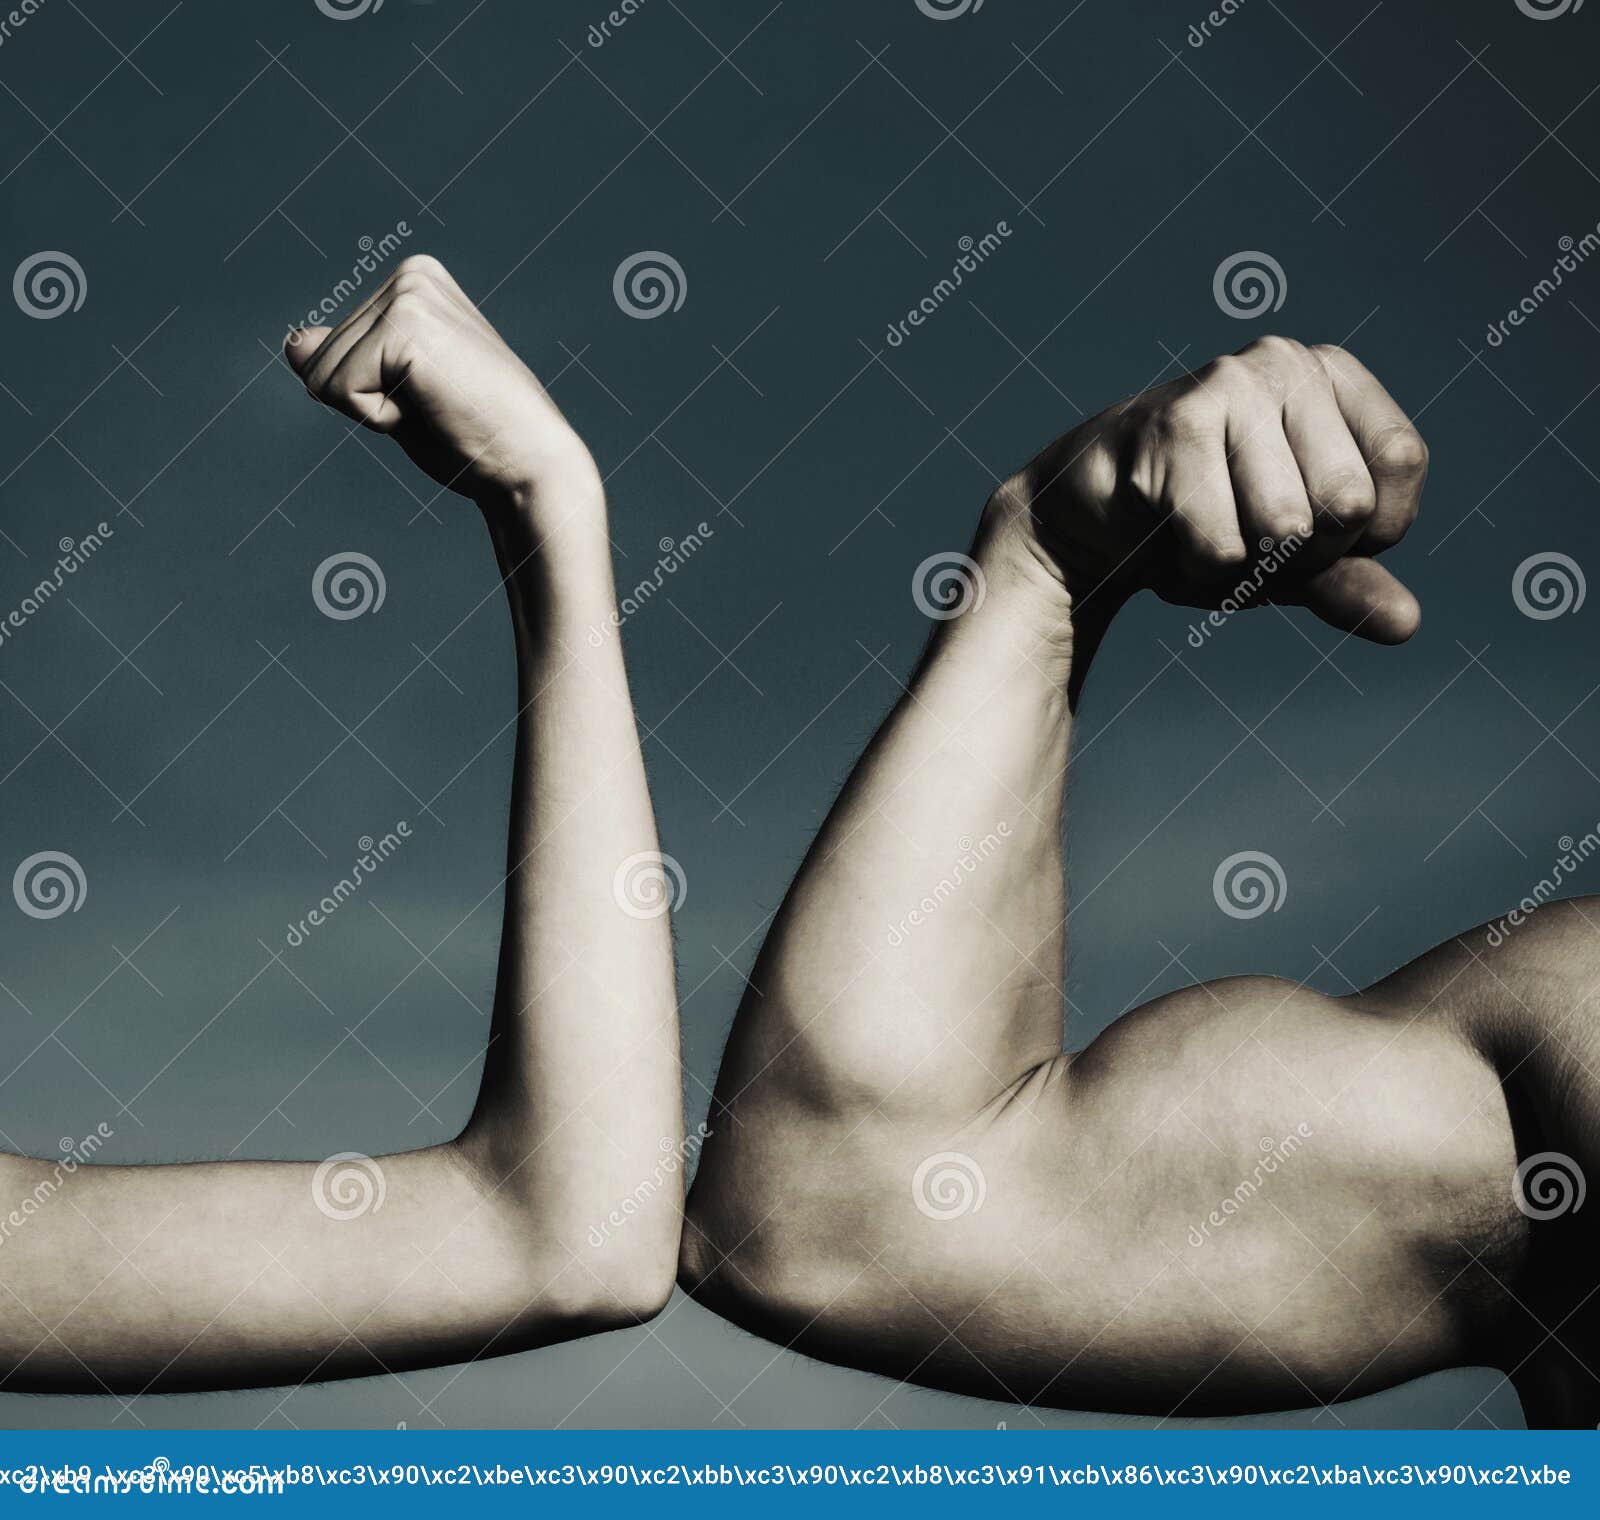 421 Arm Wrestling Man Woman Stock Photos pic